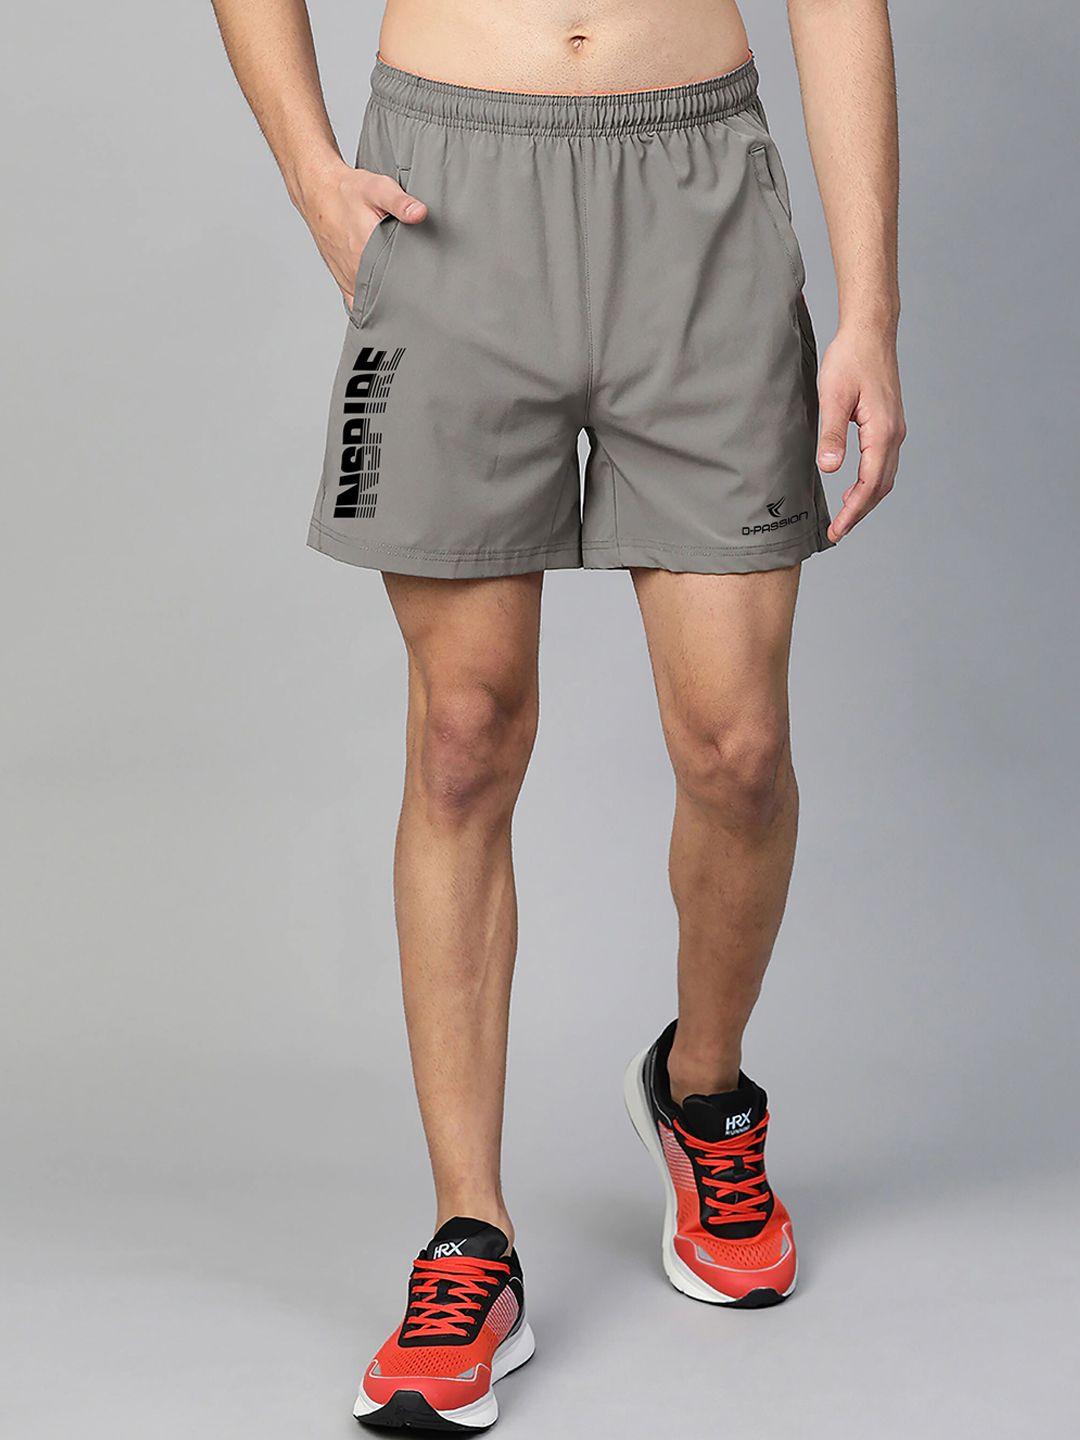 dpassion men grey solid running sports shorts